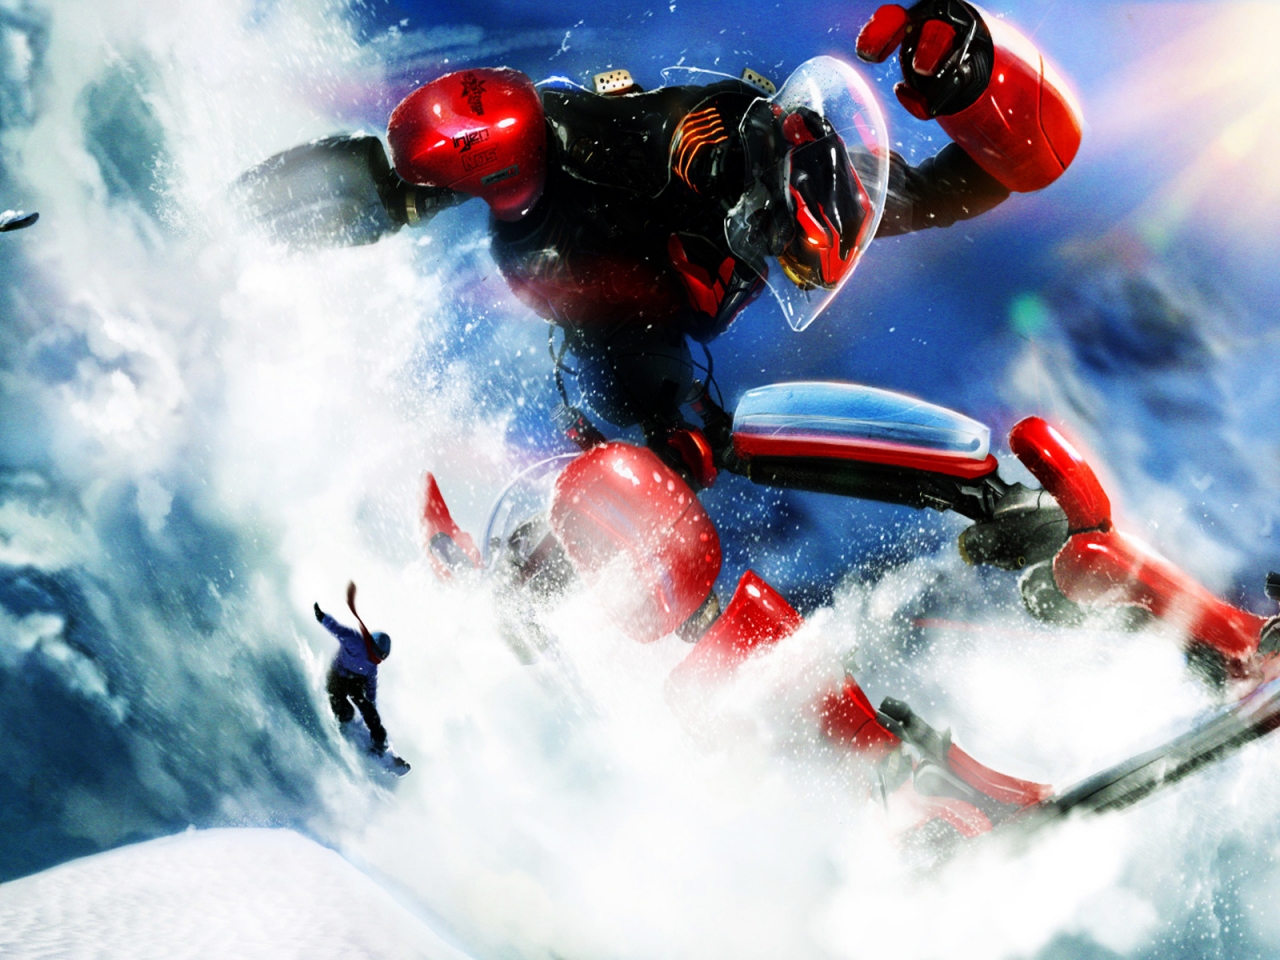 Fantasy Snowboarding for 1280 x 960 resolution